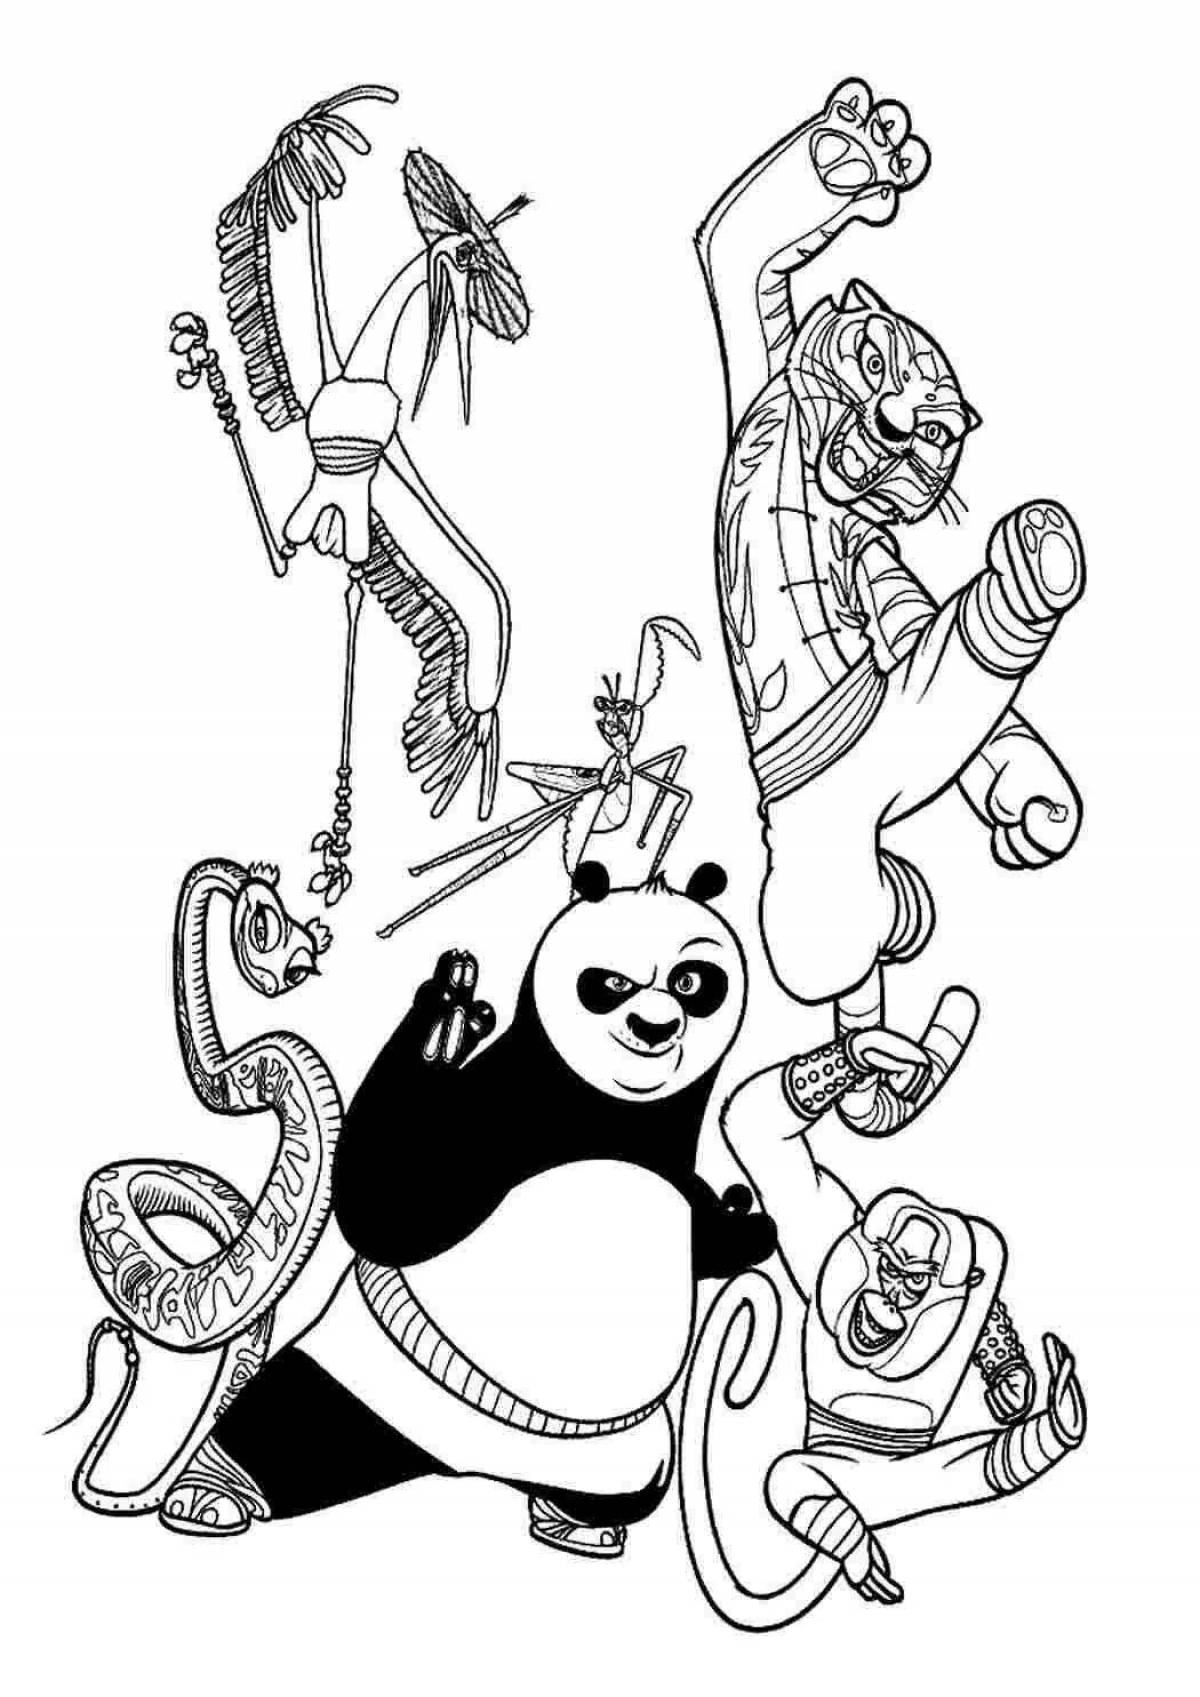 Kung Fu Panda 3 awesome coloring book